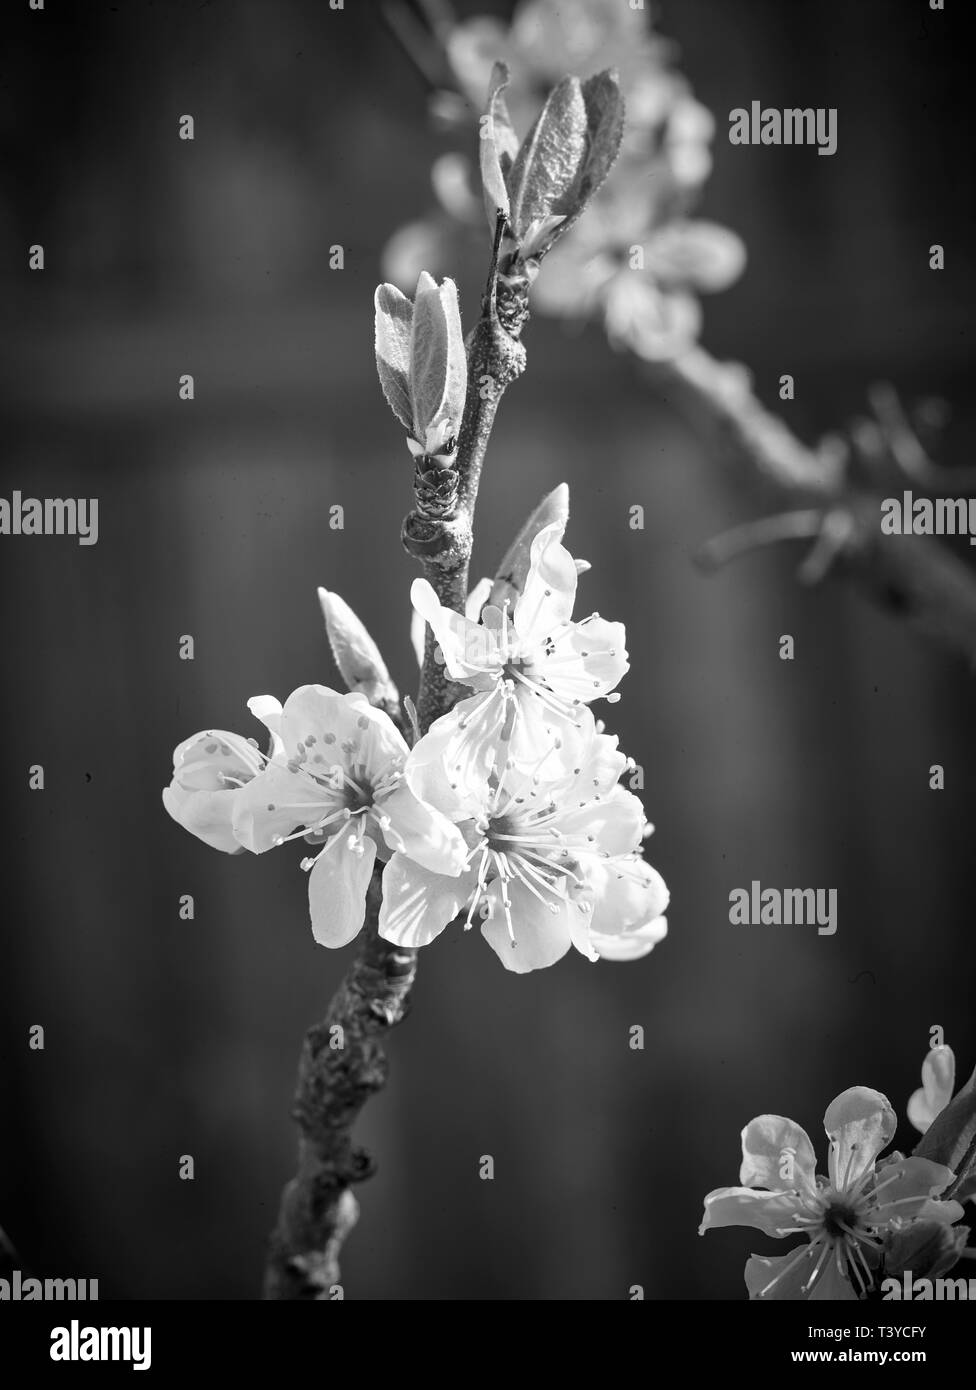 White spring blossom on garden fruit tree nature close-up portrait Stock Photo